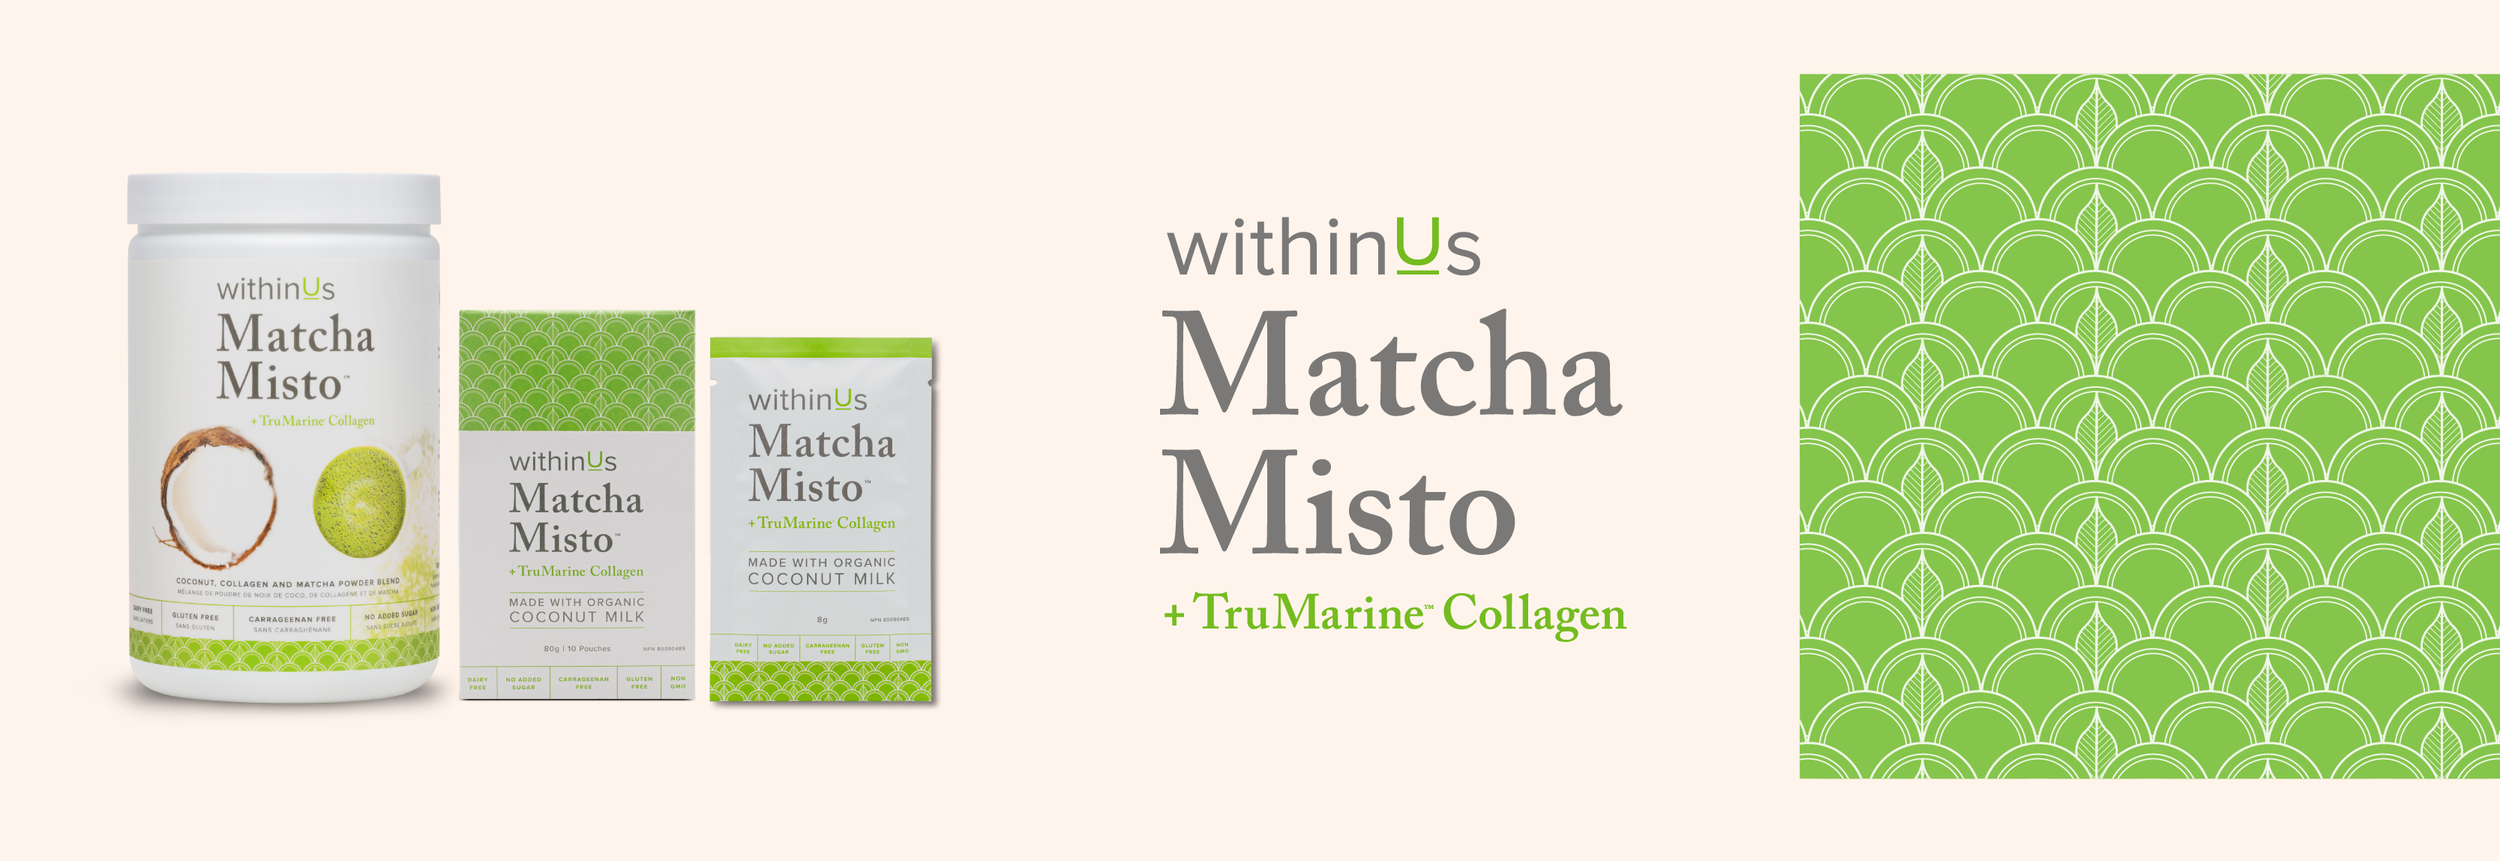 withinUs-Product-Design_Matcha_Misto.png